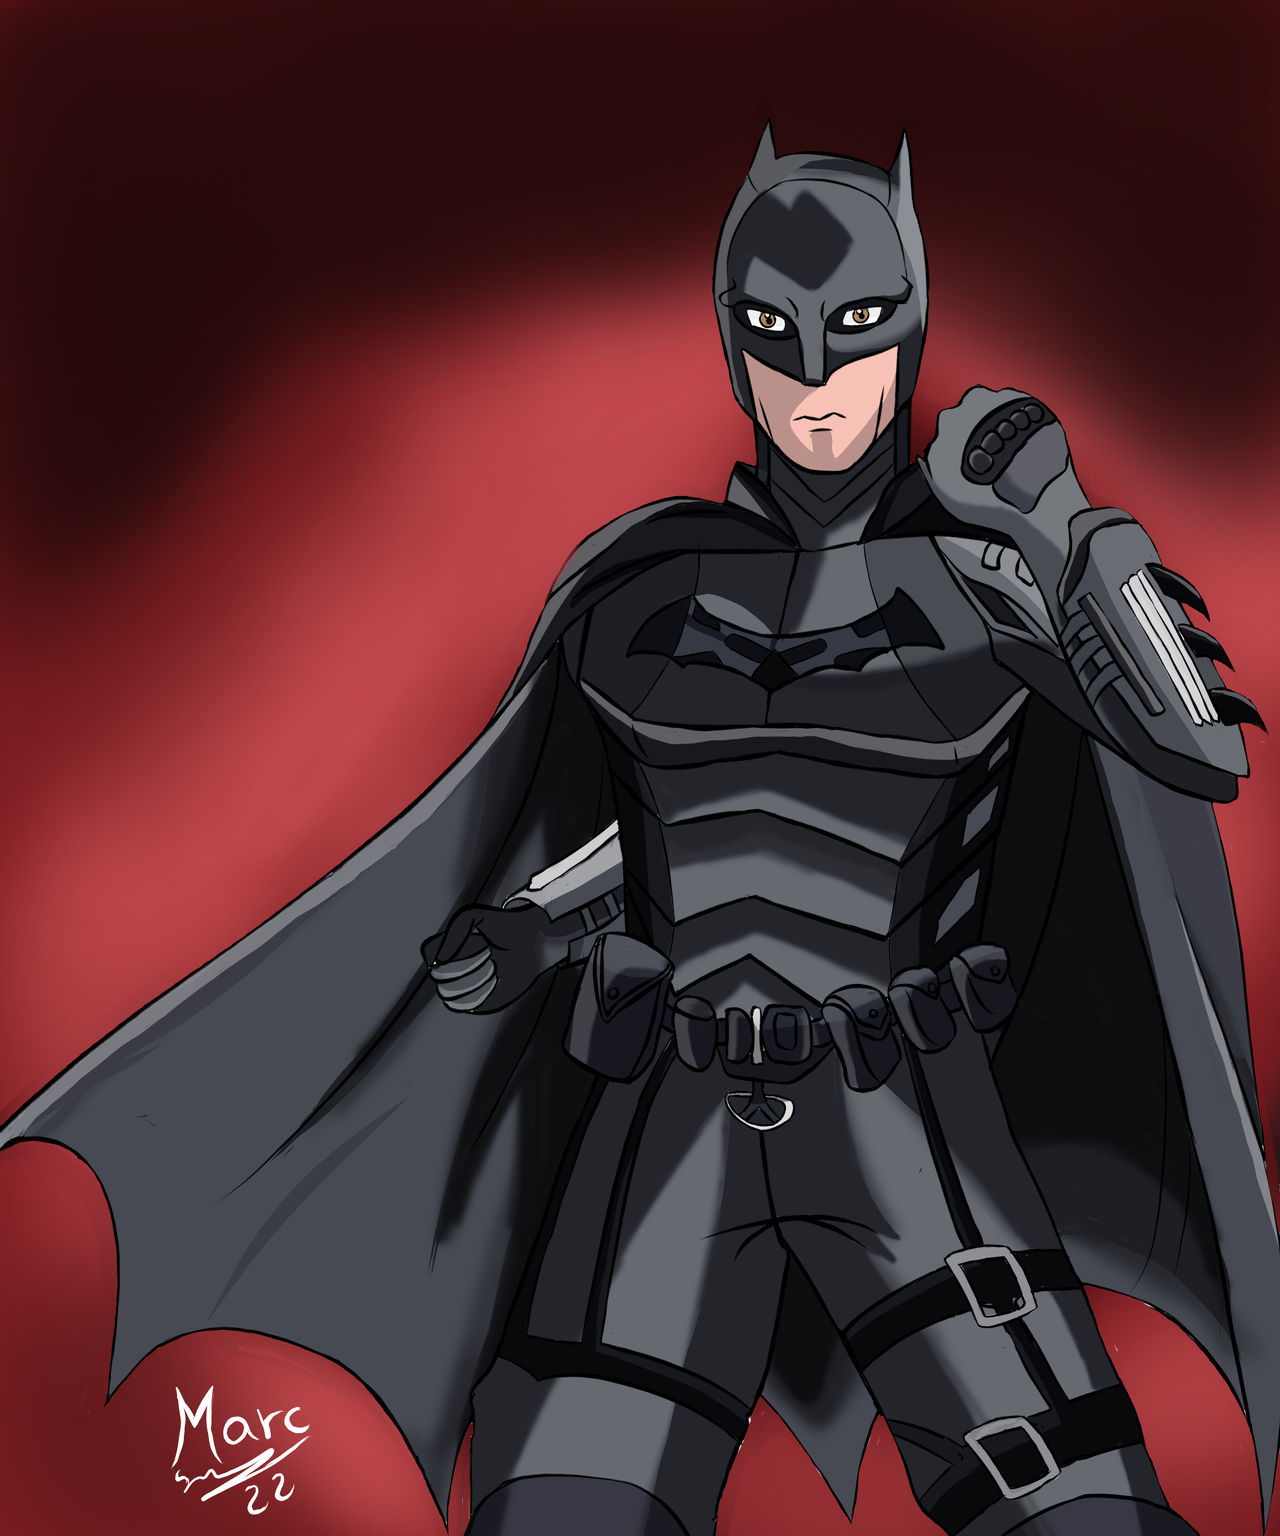 Dibujo The Batman by MarcDibujante on DeviantArt